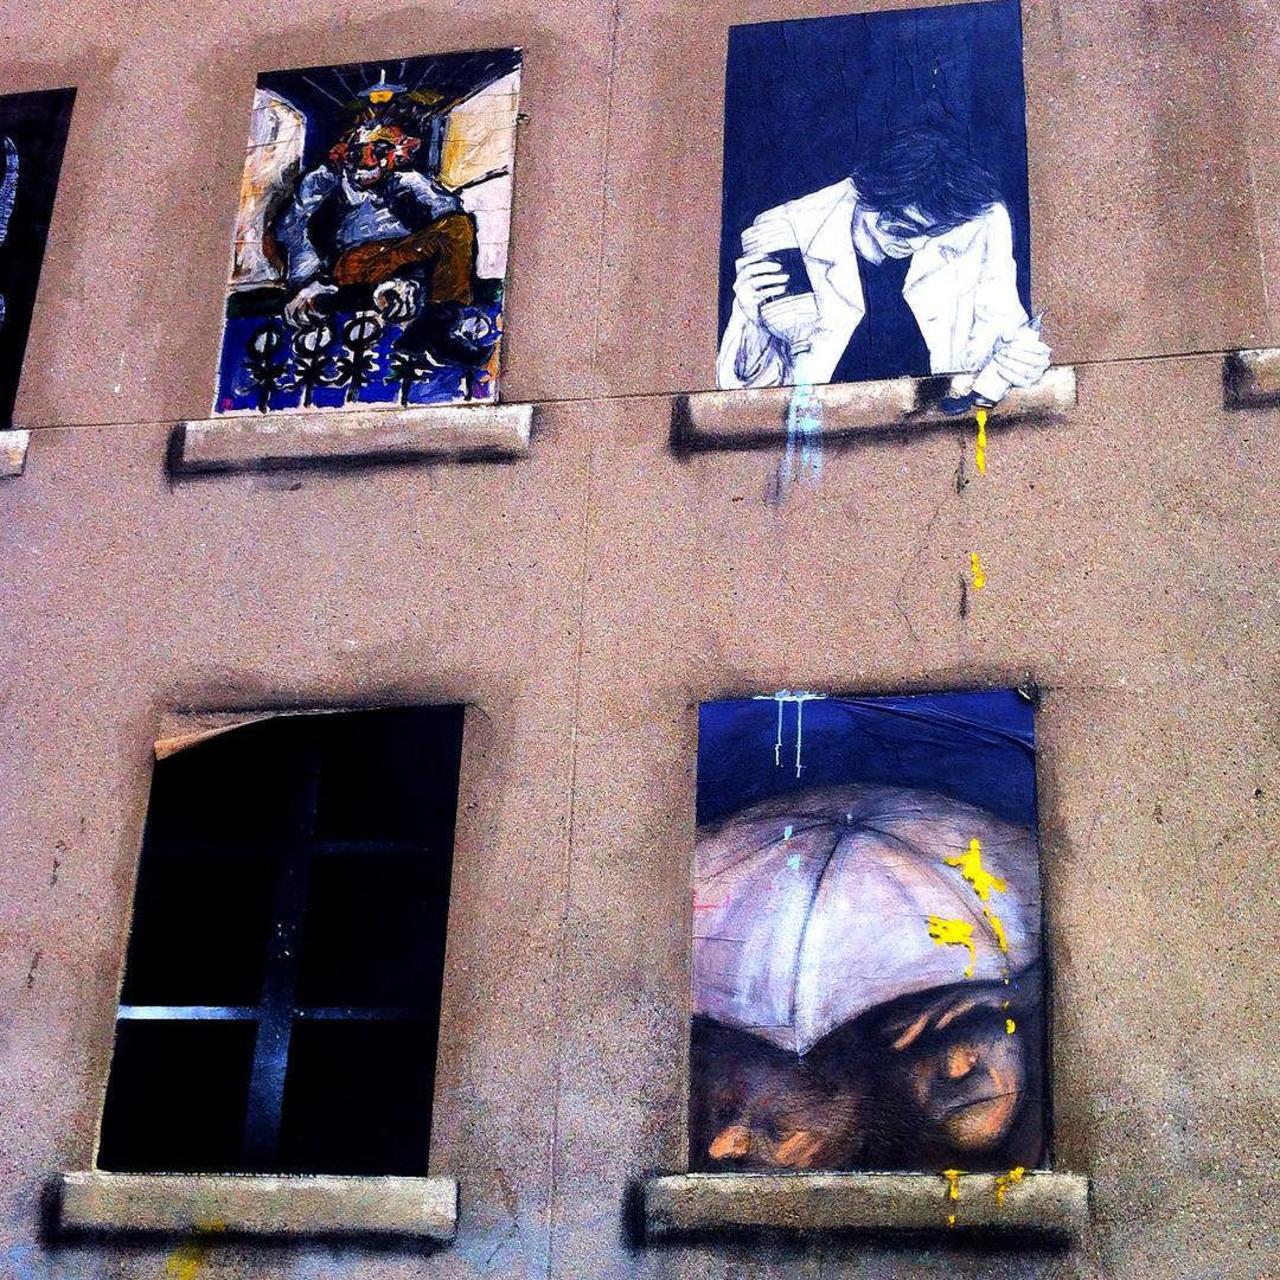 #Paris #graffiti photo by @noamzucker http://ift.tt/1G6SMT9 #StreetArt http://t.co/7We11UepGa